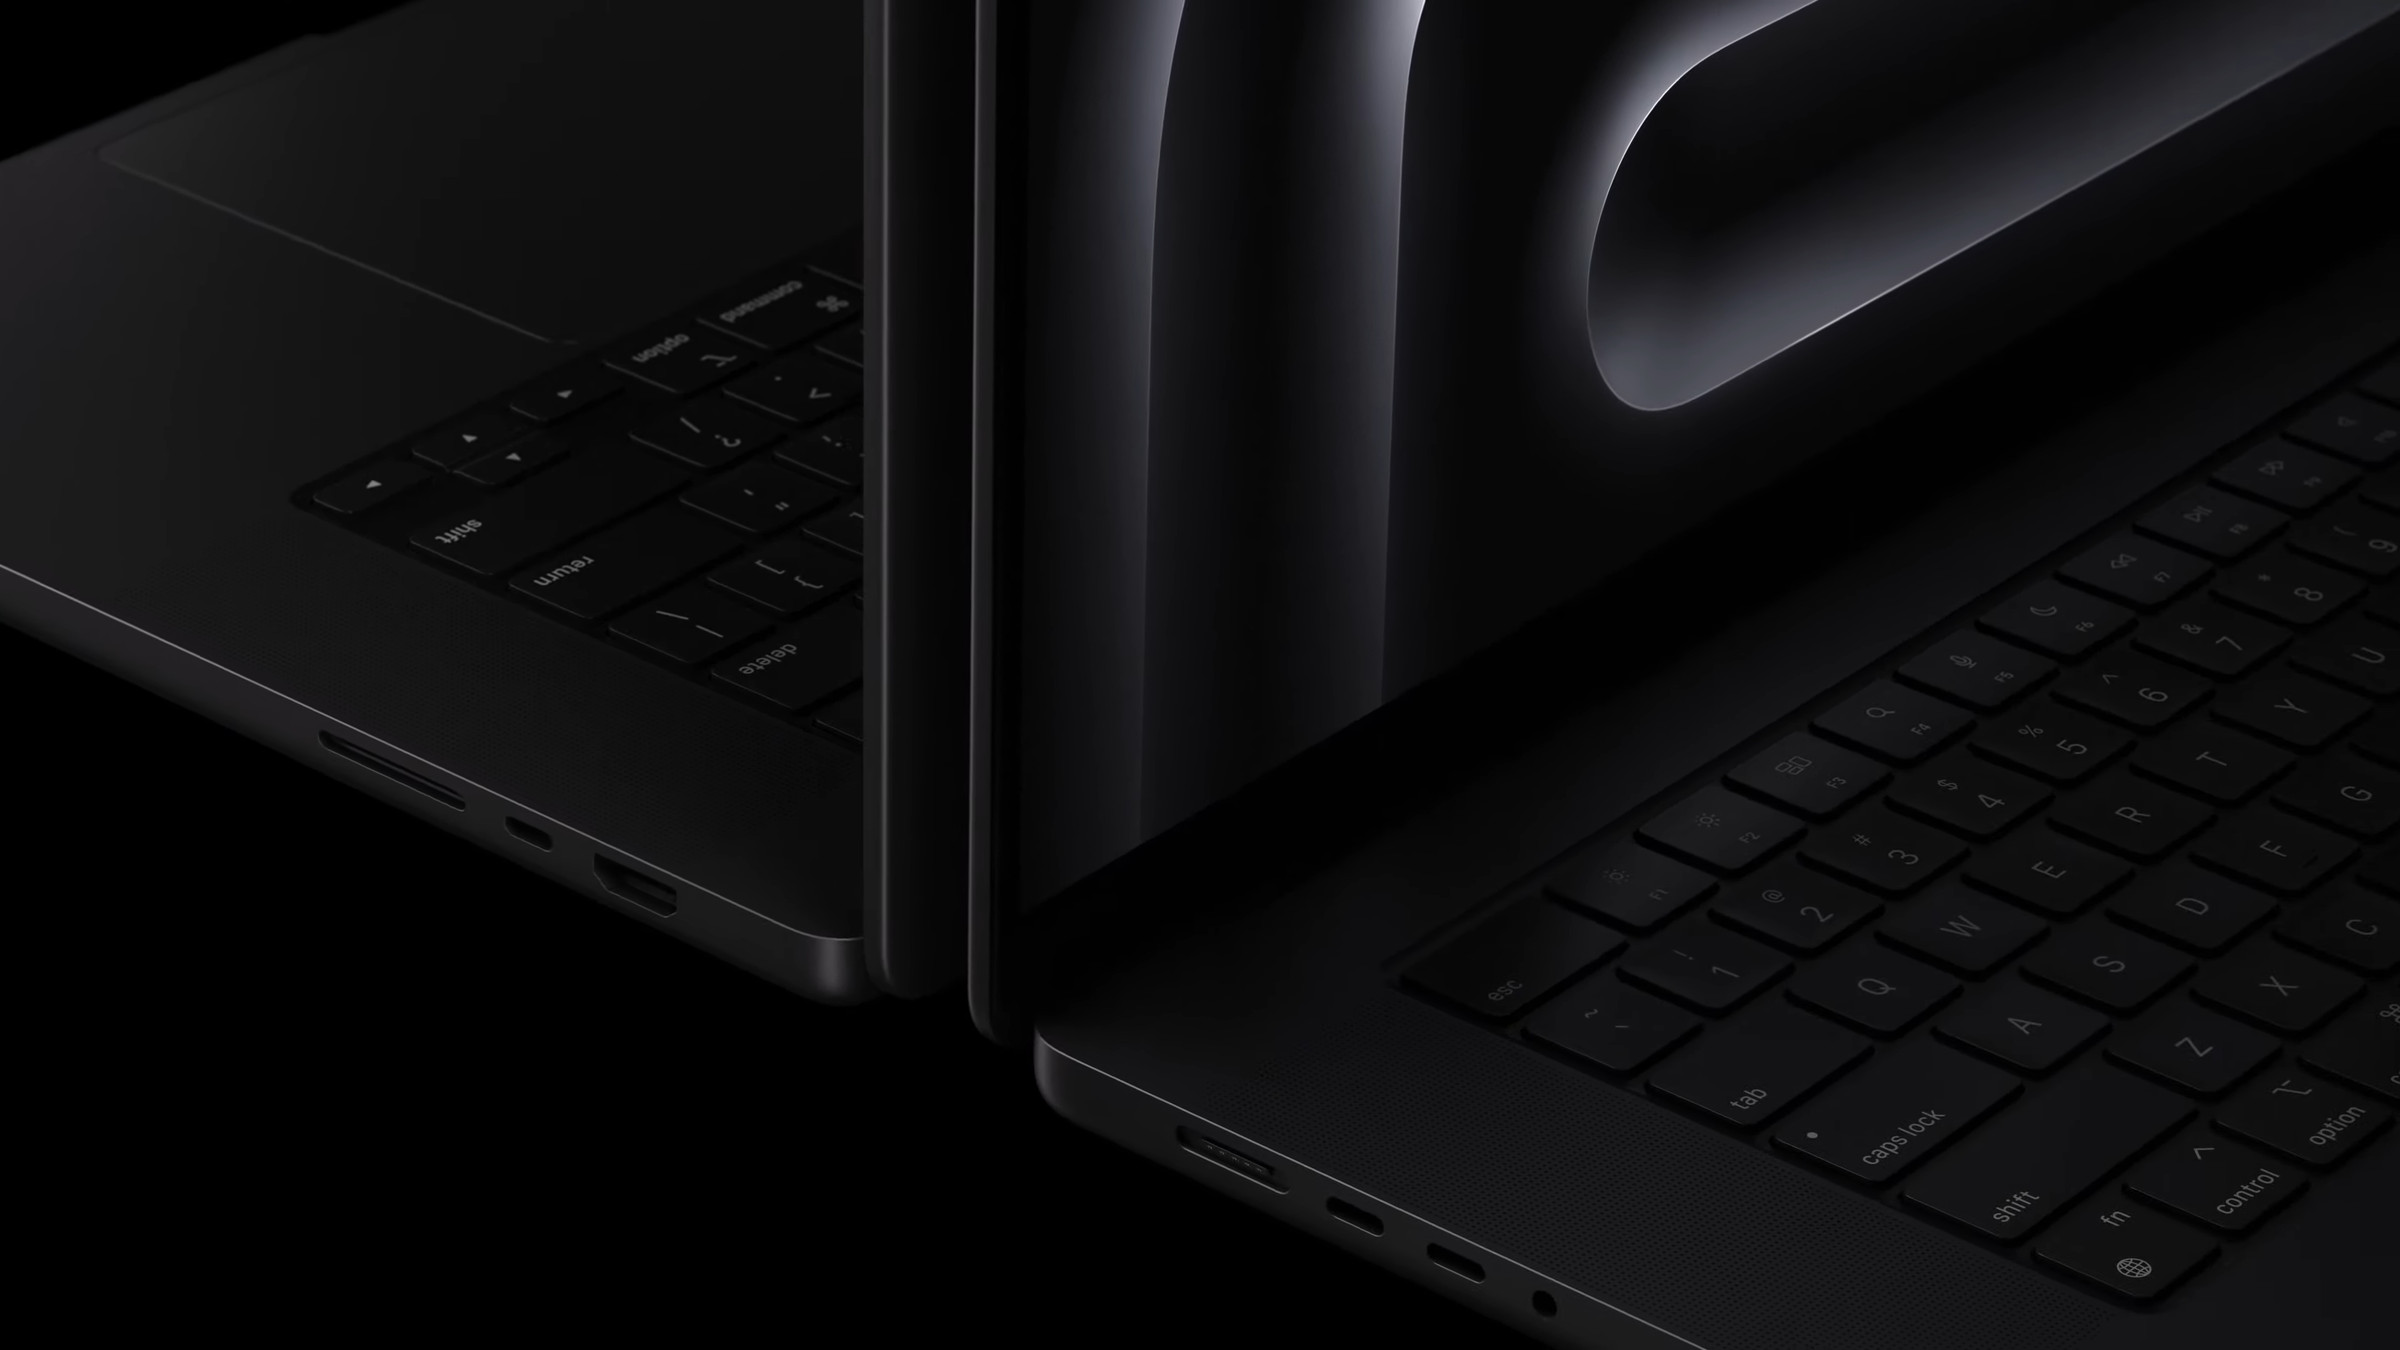 Apple’s MacBook Pro in Space Black.